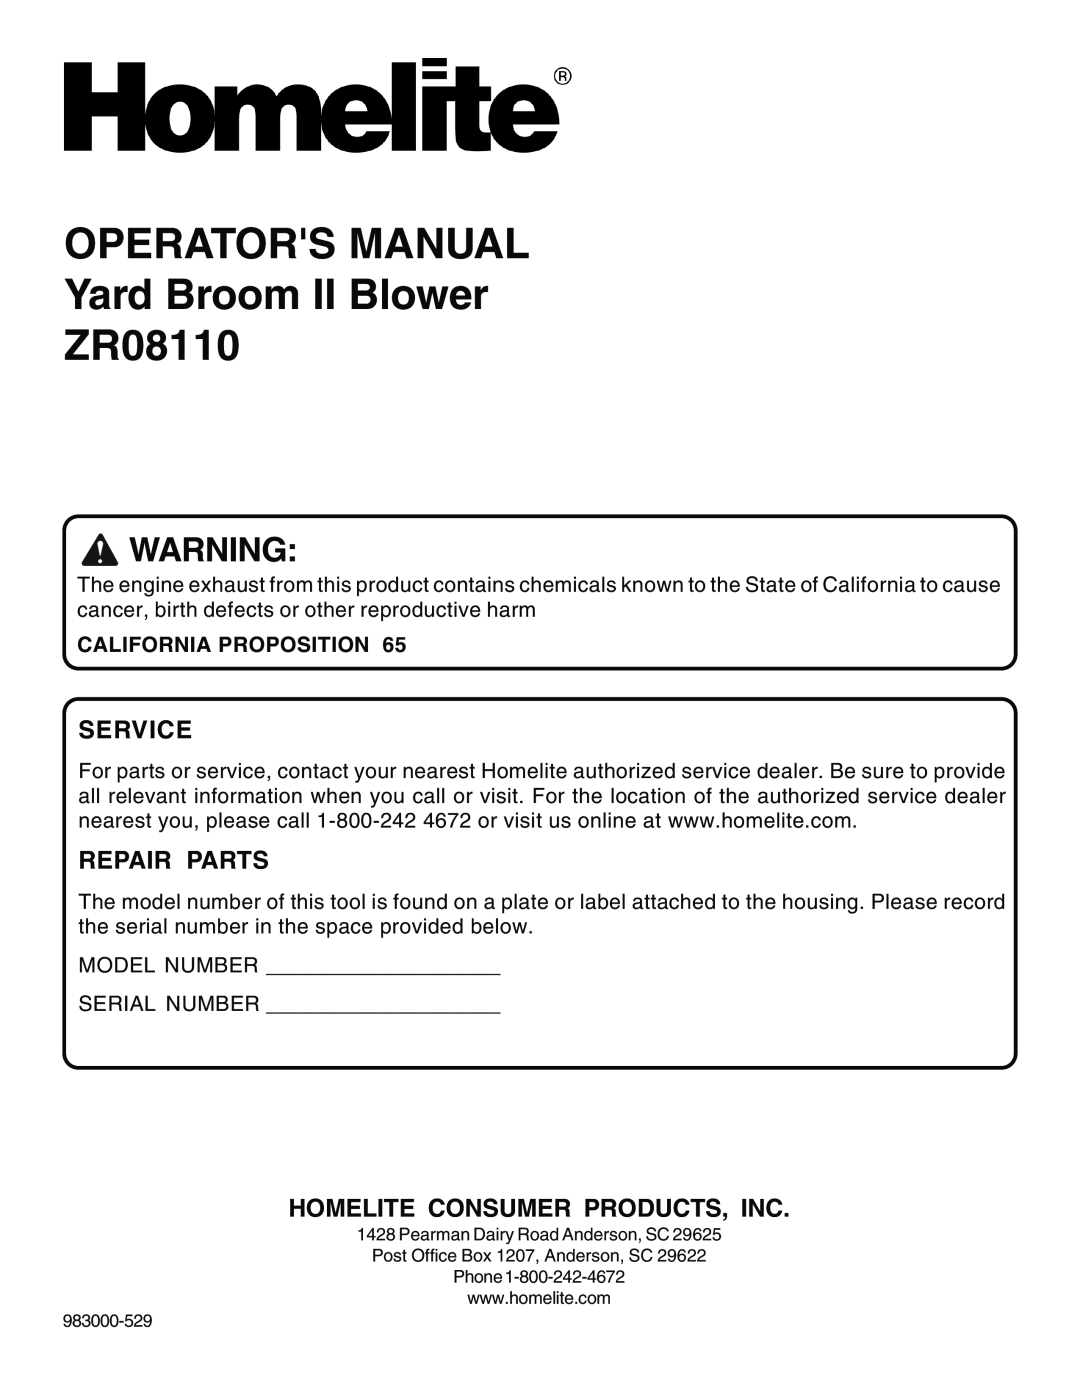 Homelite manual Service, Repair Parts, Homelite Consumer Products, Inc, OPERATORS MANUAL Yard Broom II Blower ZR08110 